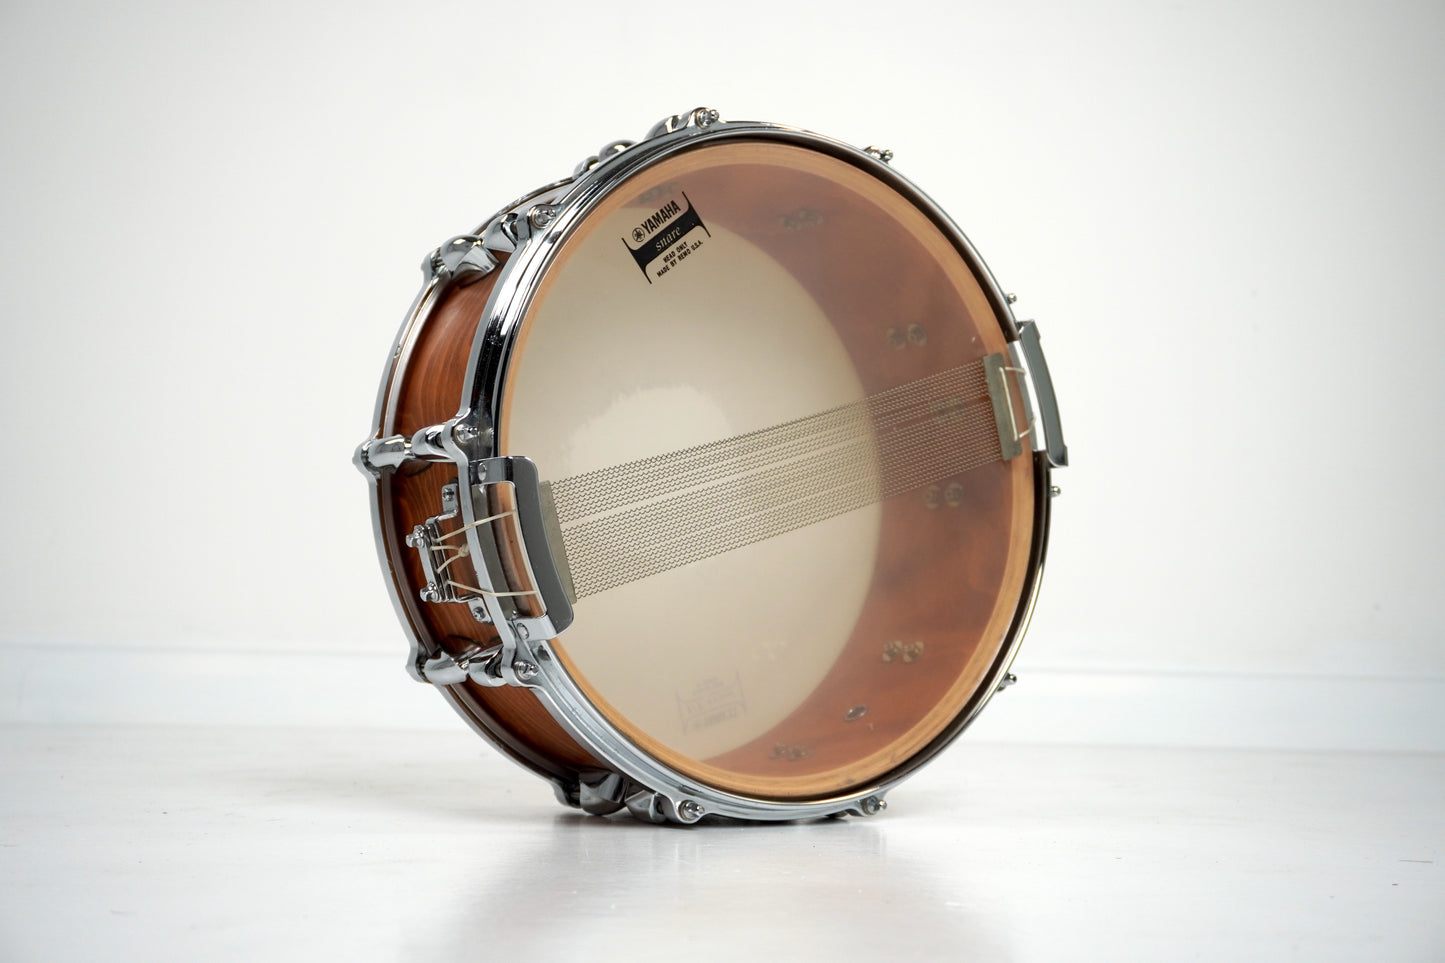 Yamaha Sonny Emory Custom Snare